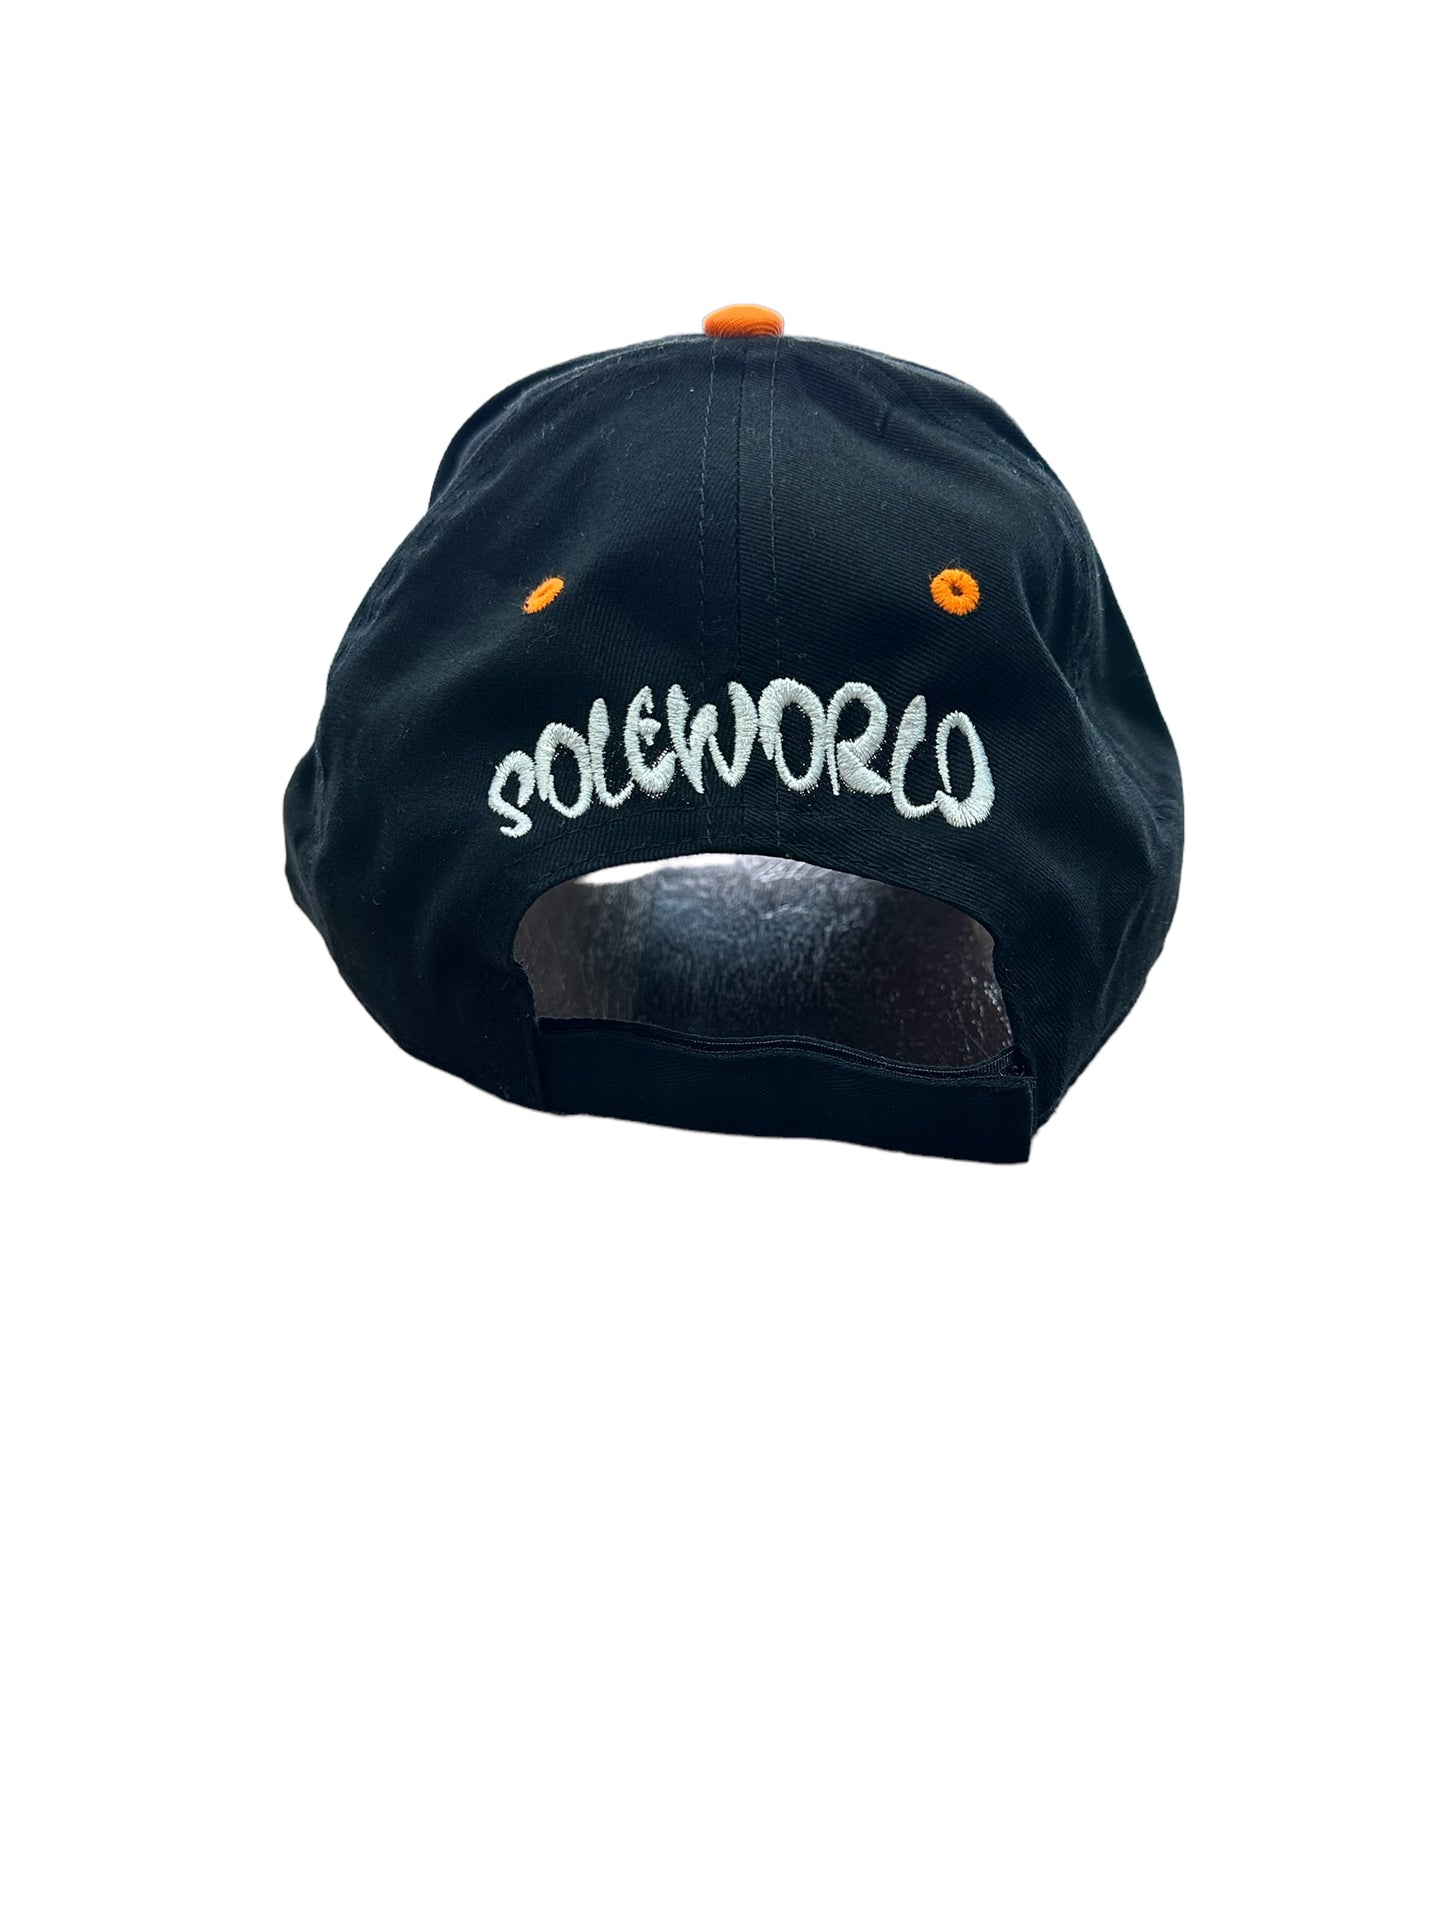 Limited Sole World Orange Flames Hat